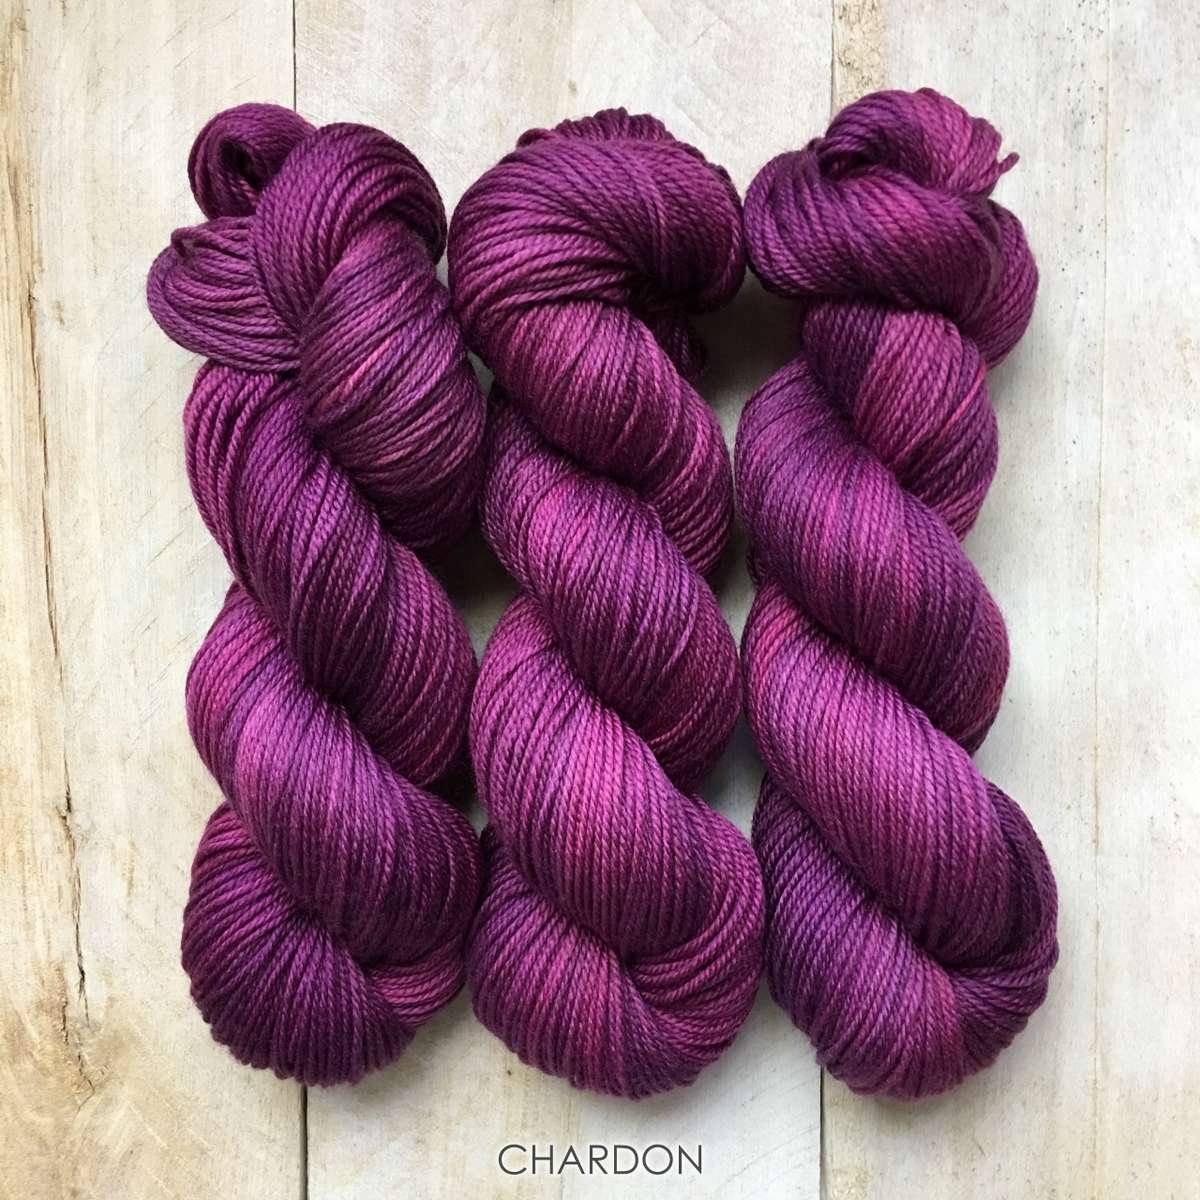 Hand-dyed yarn Louise Robert Chardon